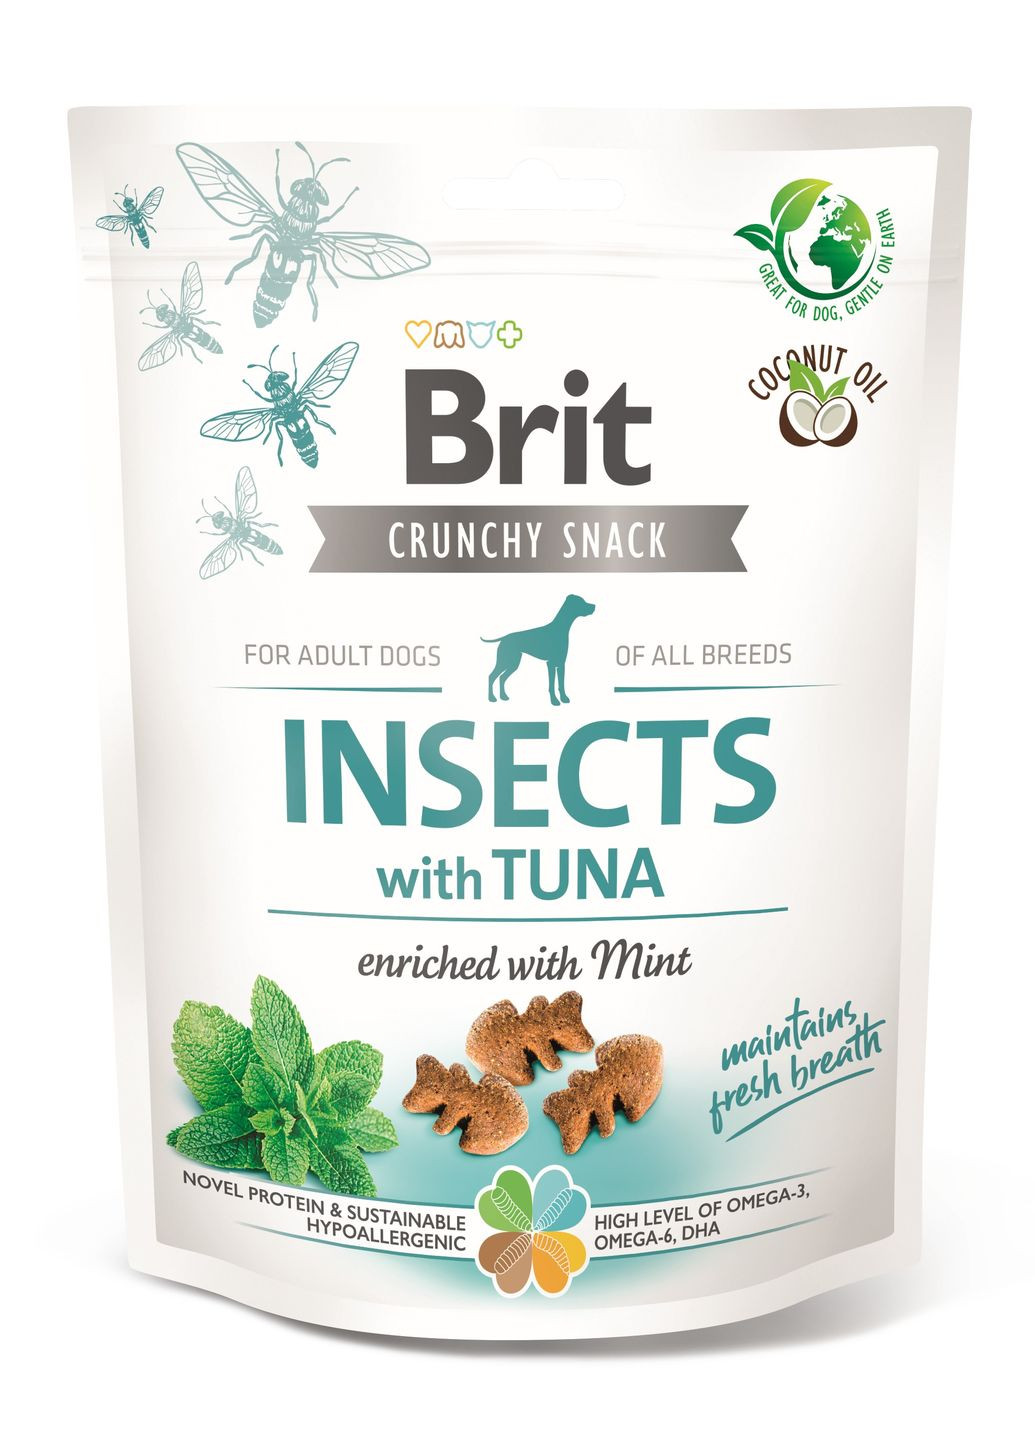 Ласощі для собак Care Dog Crunchy Cracker Insects with Tuna для свіжості подиху комахи, тунець, м'ята, 200 г Brit (266900392)